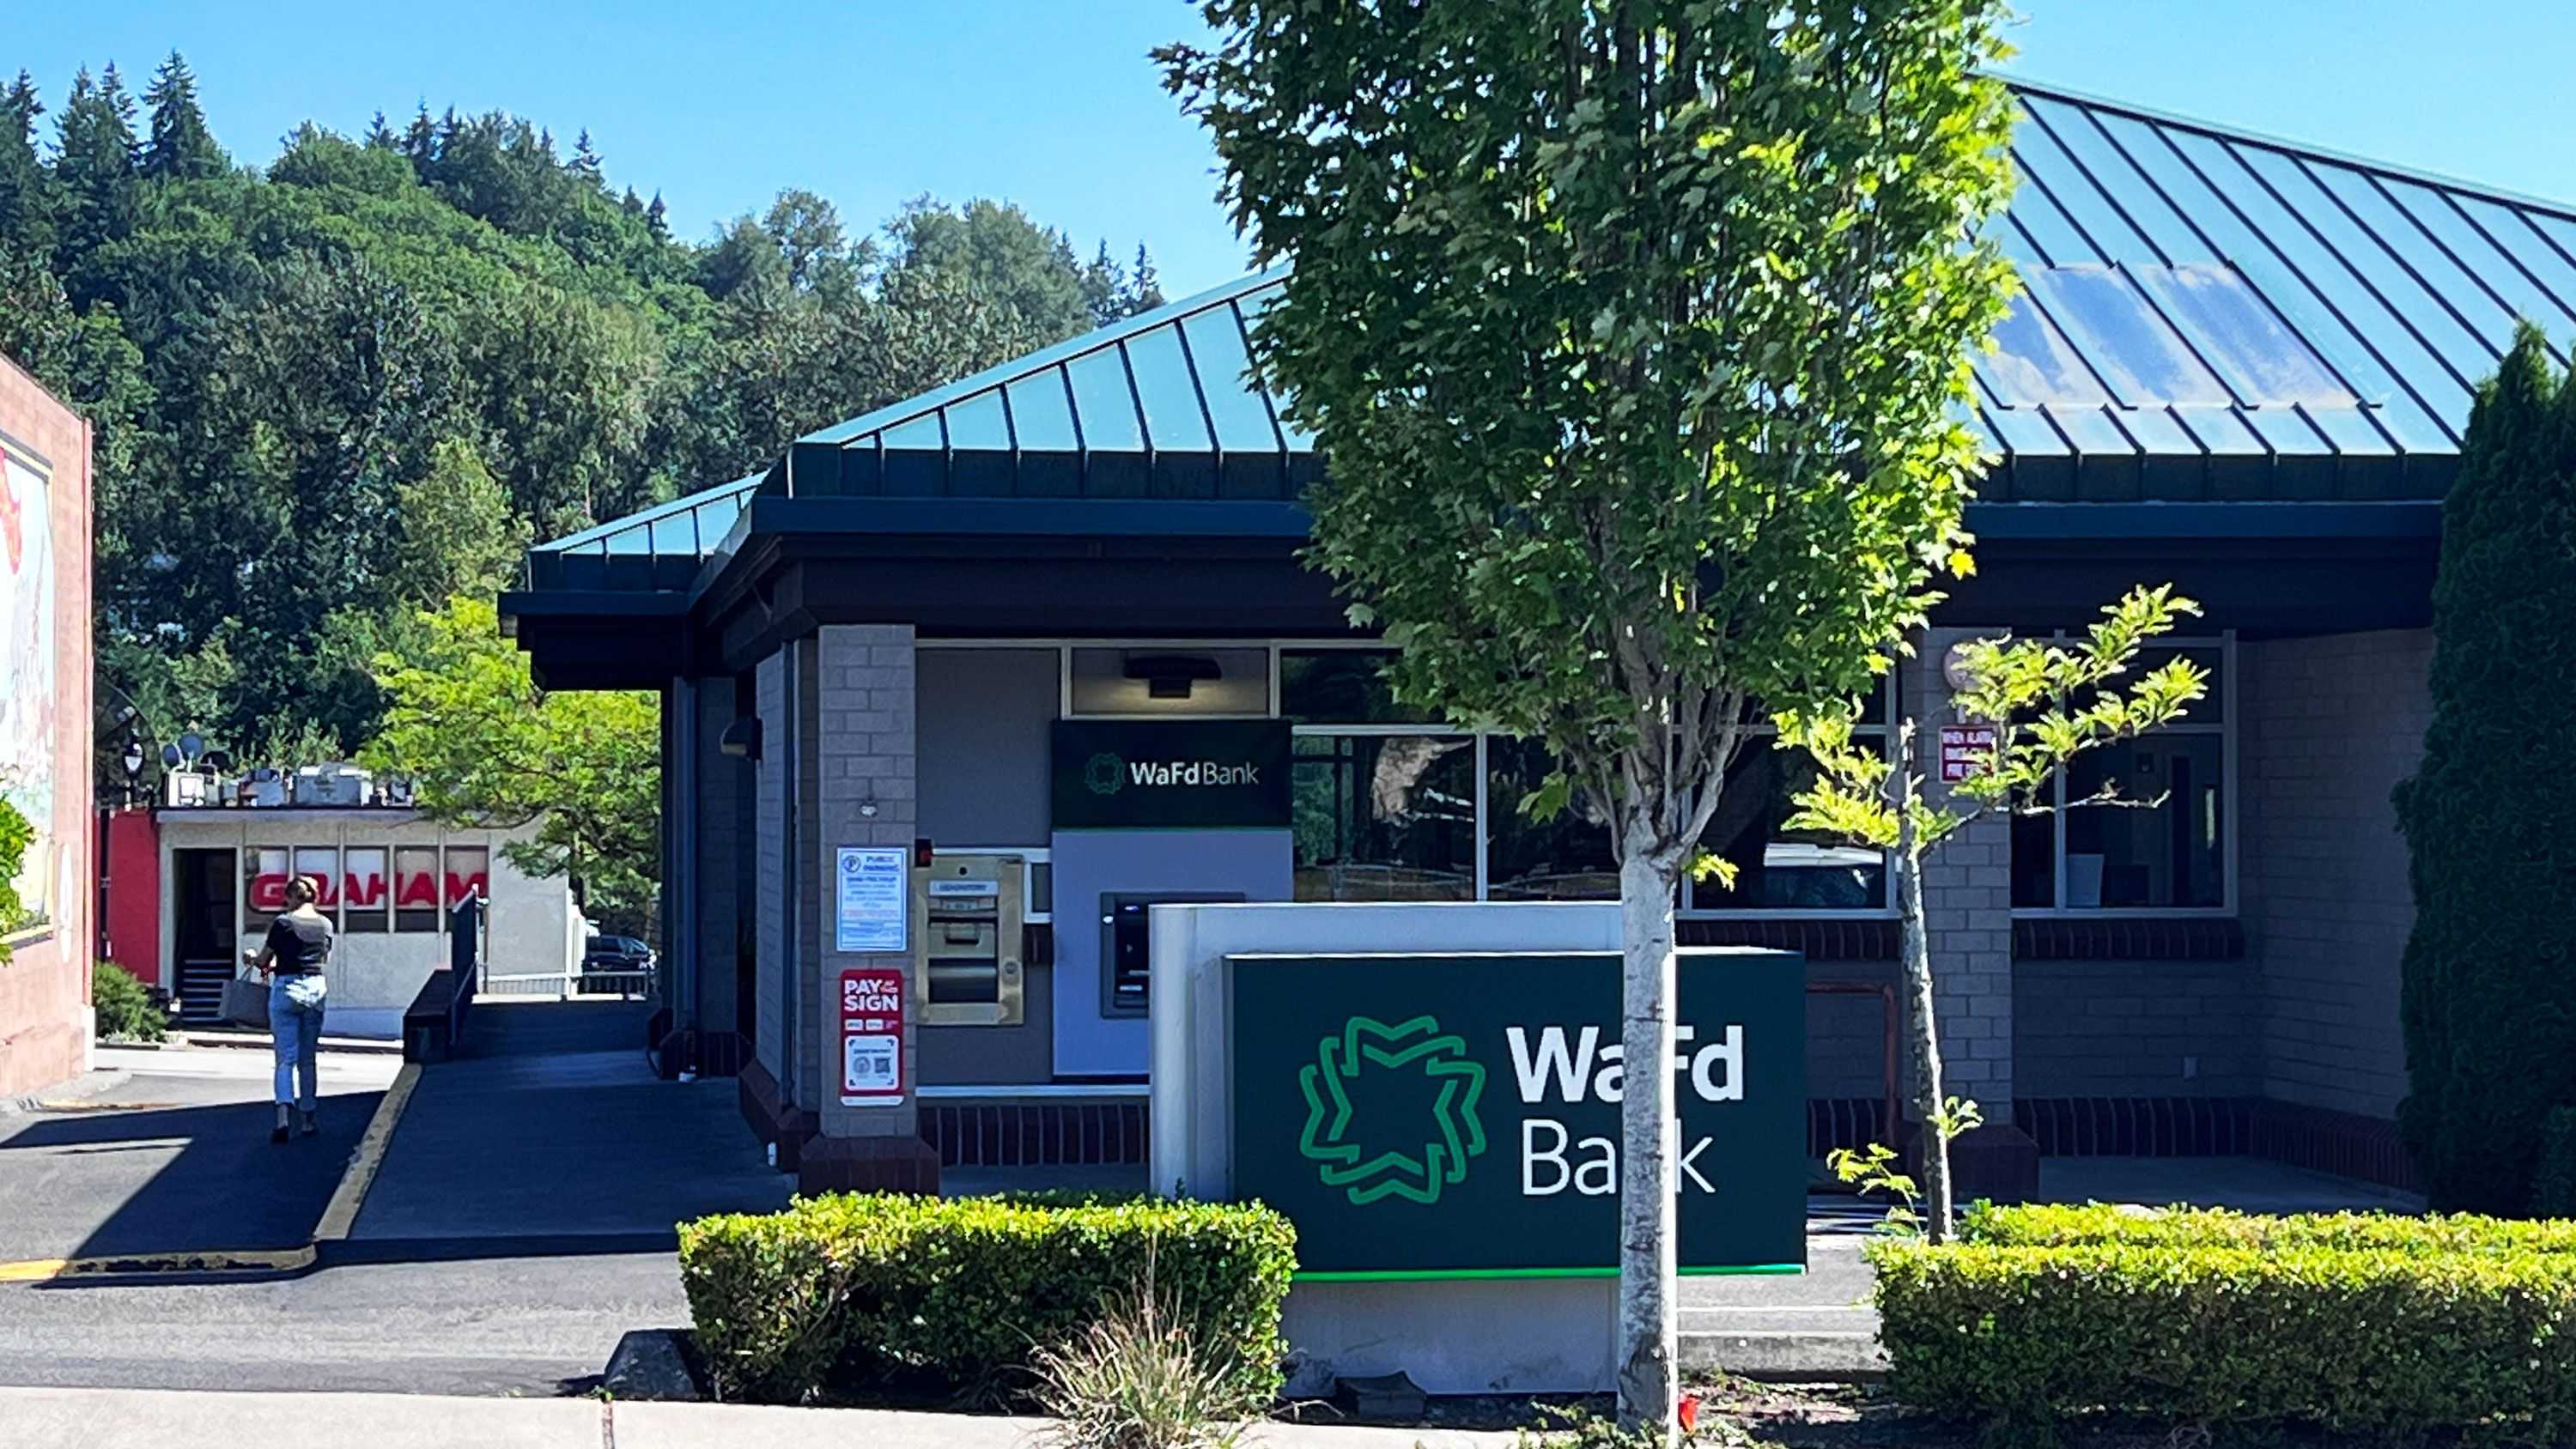 WaFd Bank in Bothell, Washington #1002 - Washington Federal.